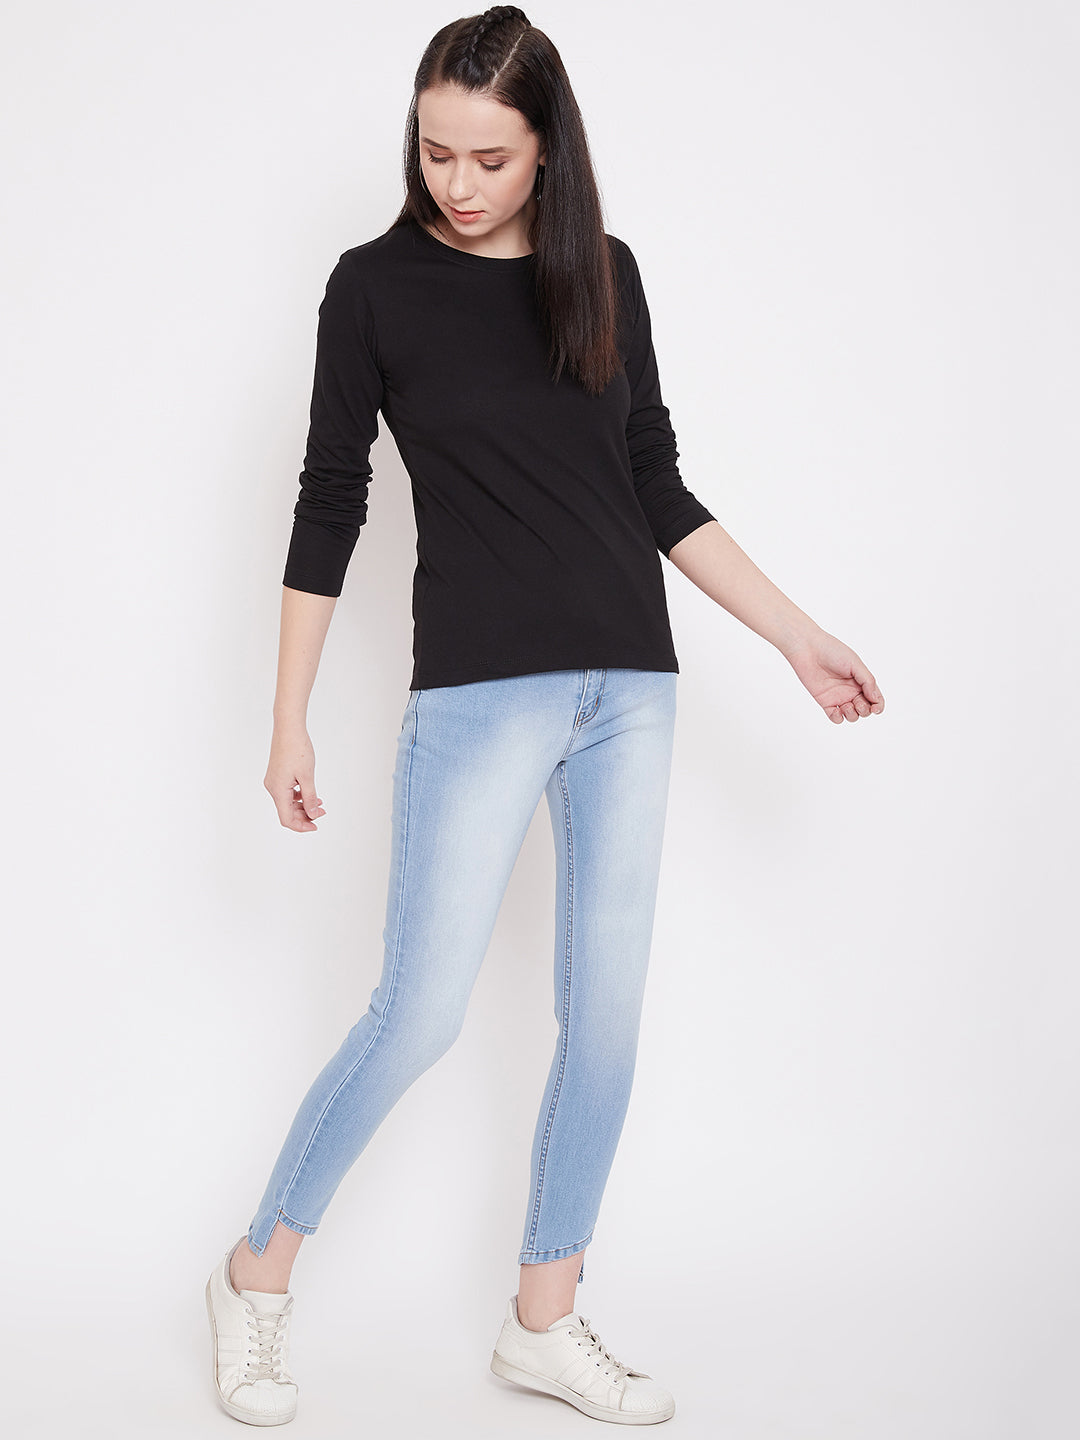 Buy New Look Women's Plus-Size Longline Denim Shirt, Blue, 20/16 at  Amazon.in